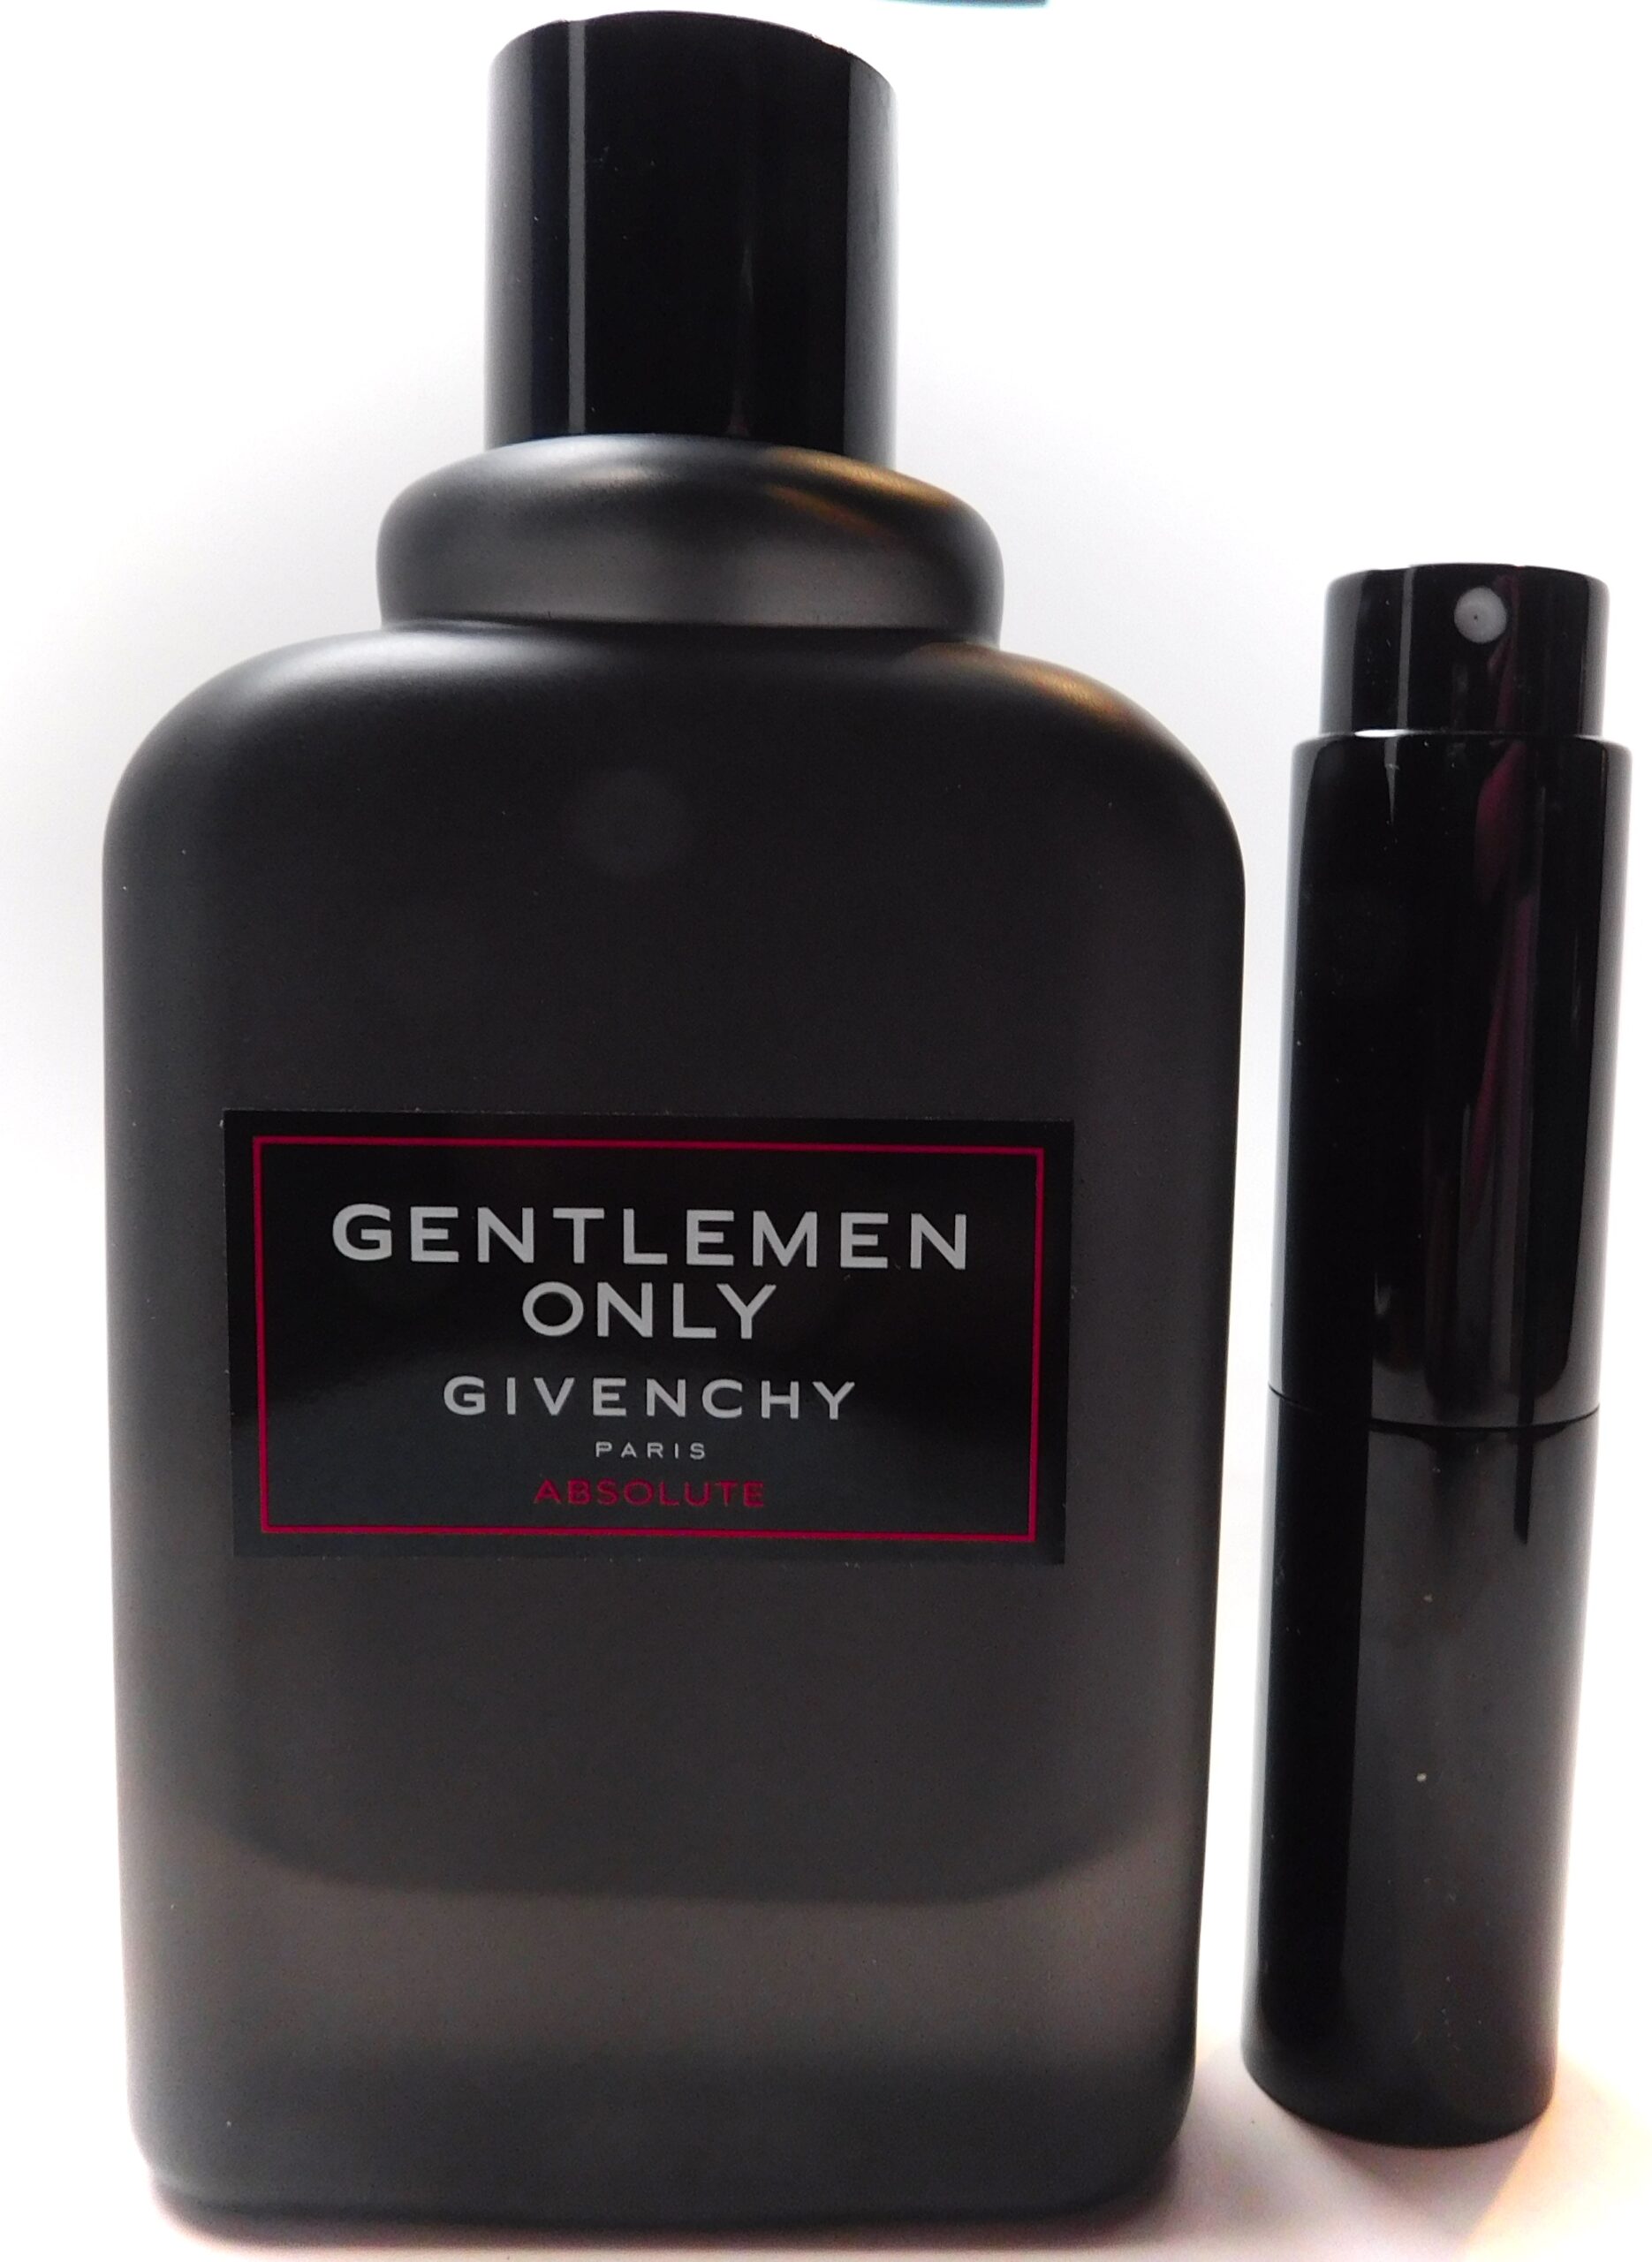 Givenchy Gentleman Only absolute 8ml Travel atomizer cologne spray eau de parfum - Best Brands